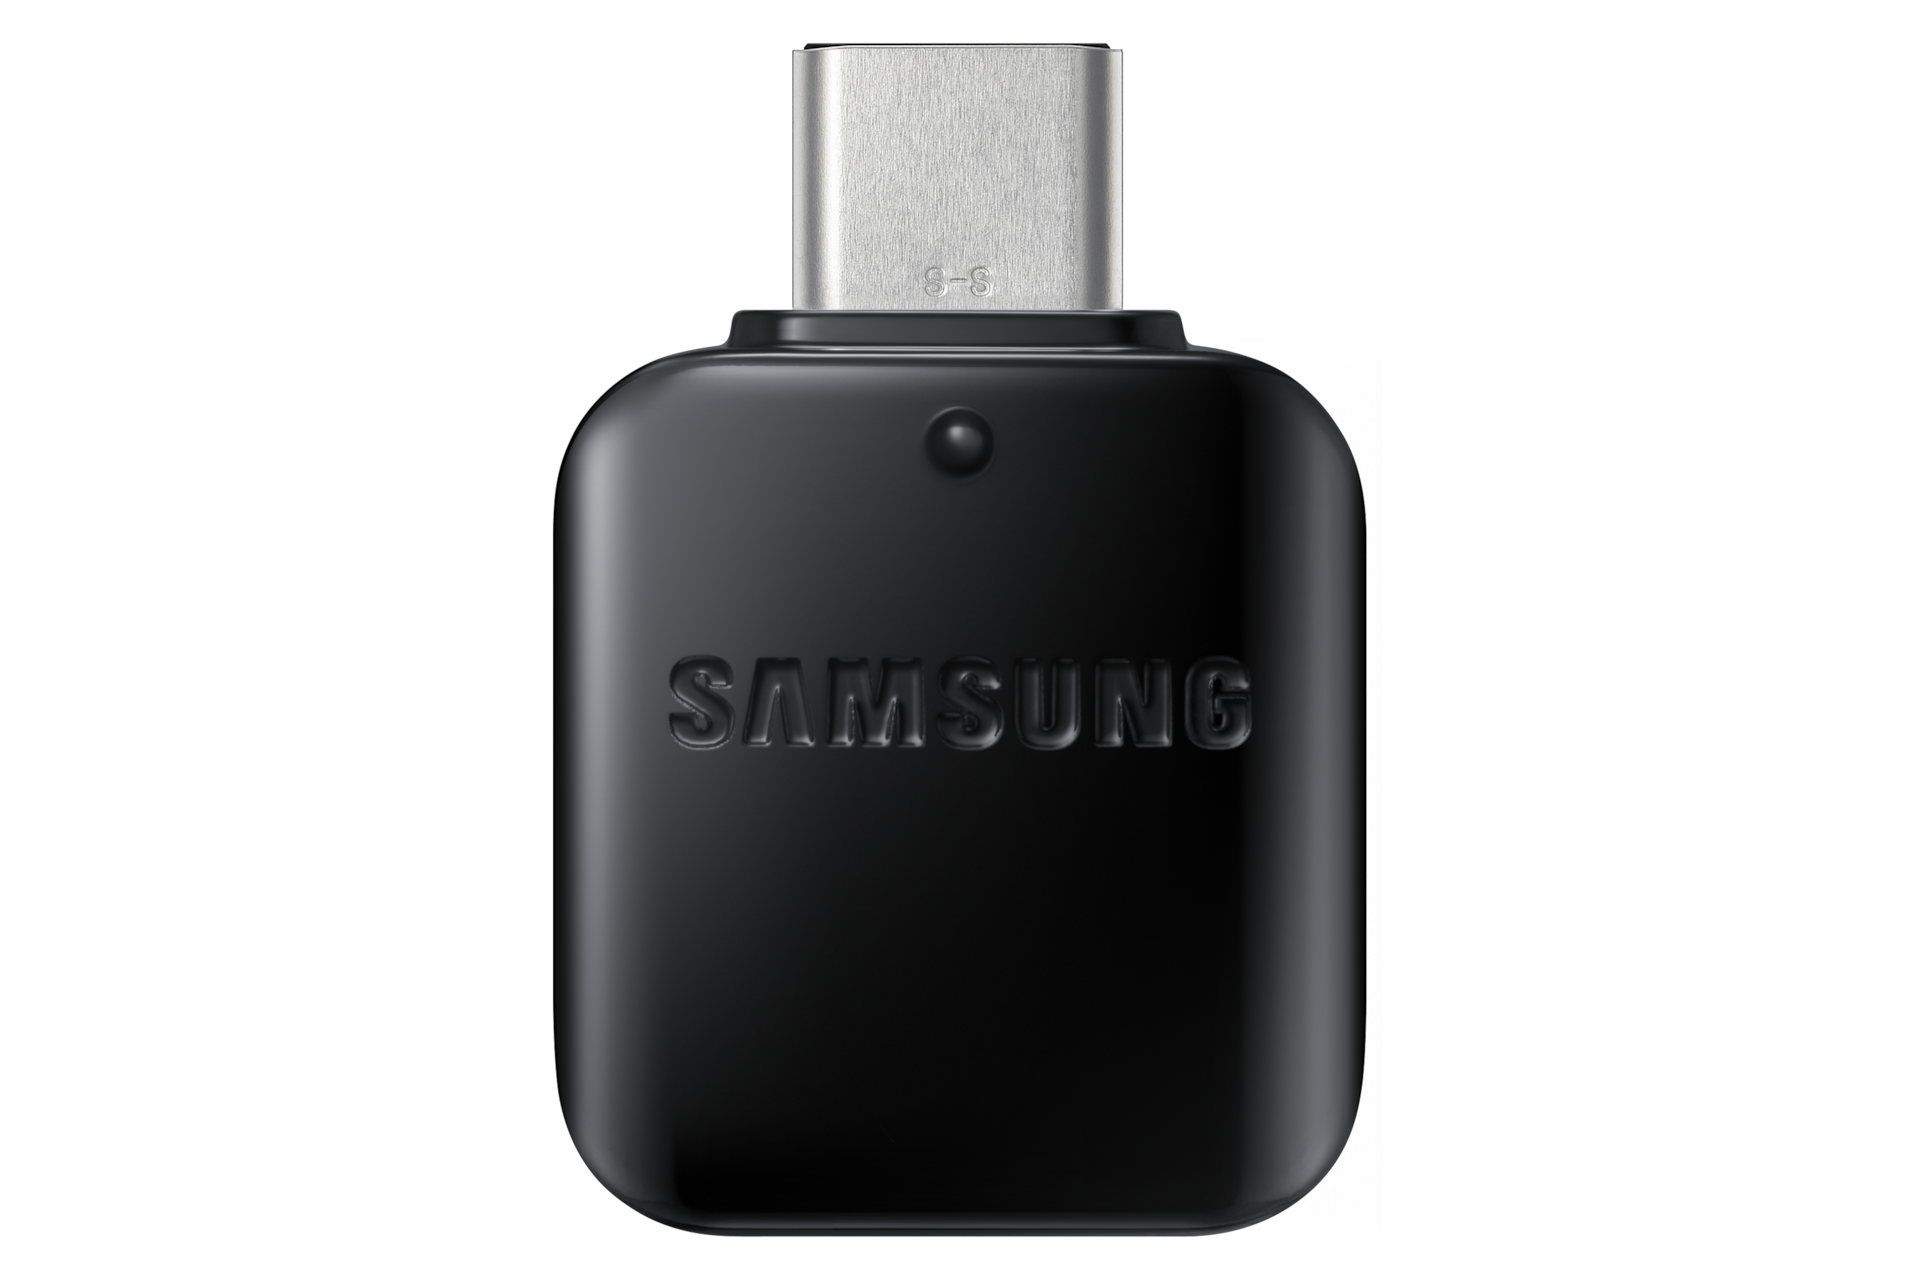 SNIGJAT Adaptador USB C OTG, adaptador USB C a USB para Samsung Galaxy  S9/S10/S20/S21/S21+ Note 10/10+/20 Ultra, Thunderbolt 3 a USB 3.0 hembra  para